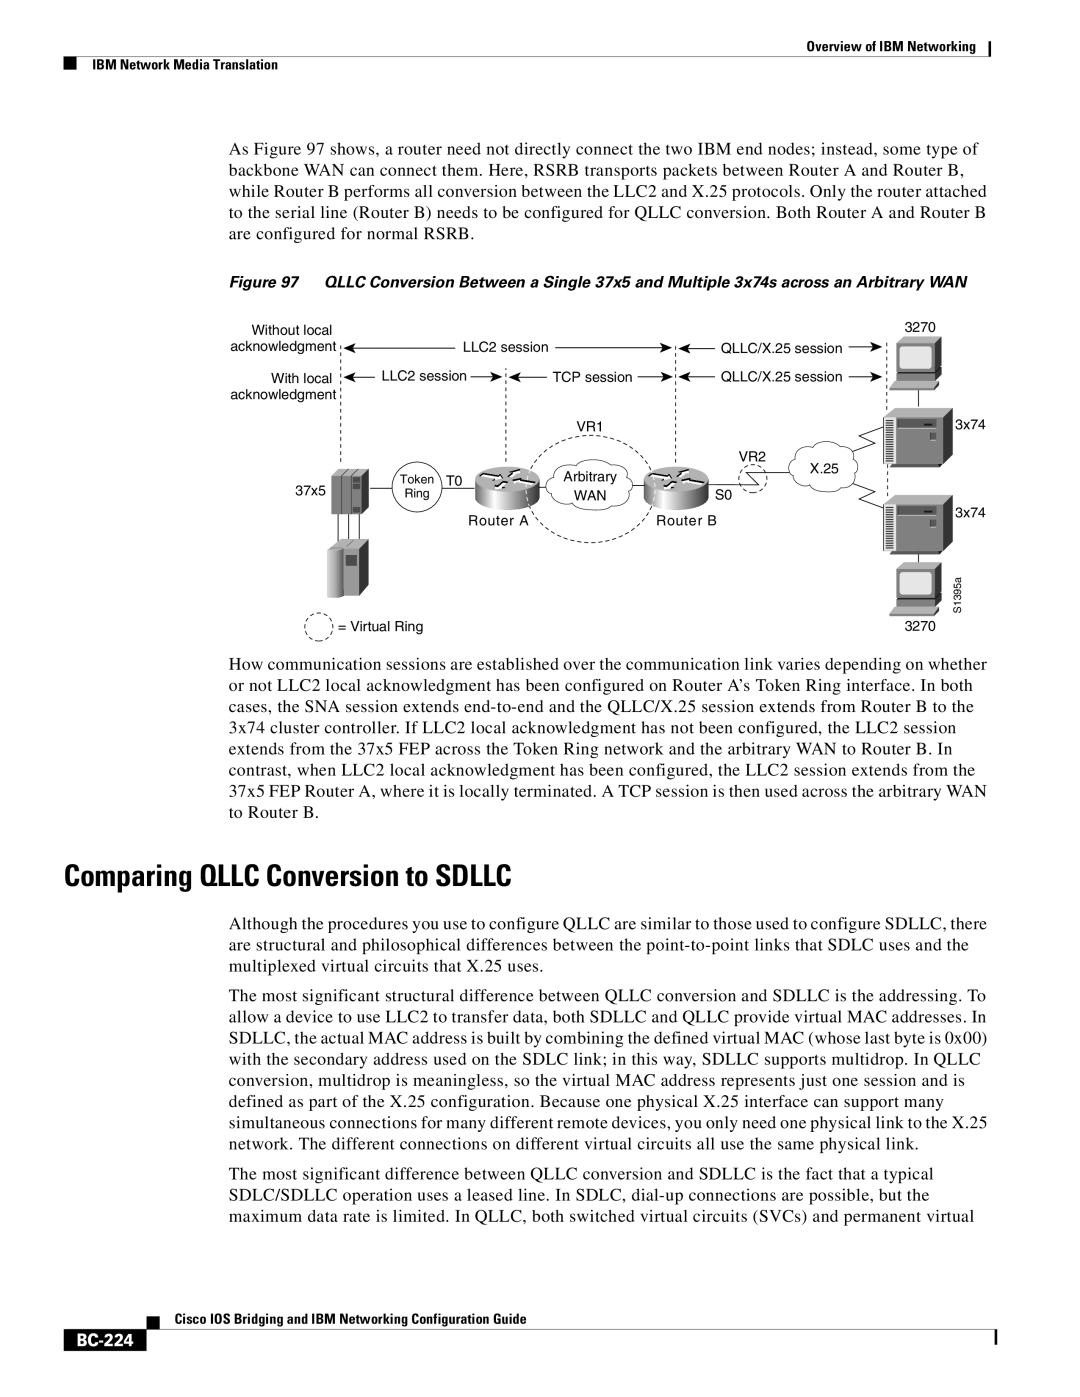 IBM BC-203 manual Comparing QLLC Conversion to SDLLC, BC-224 